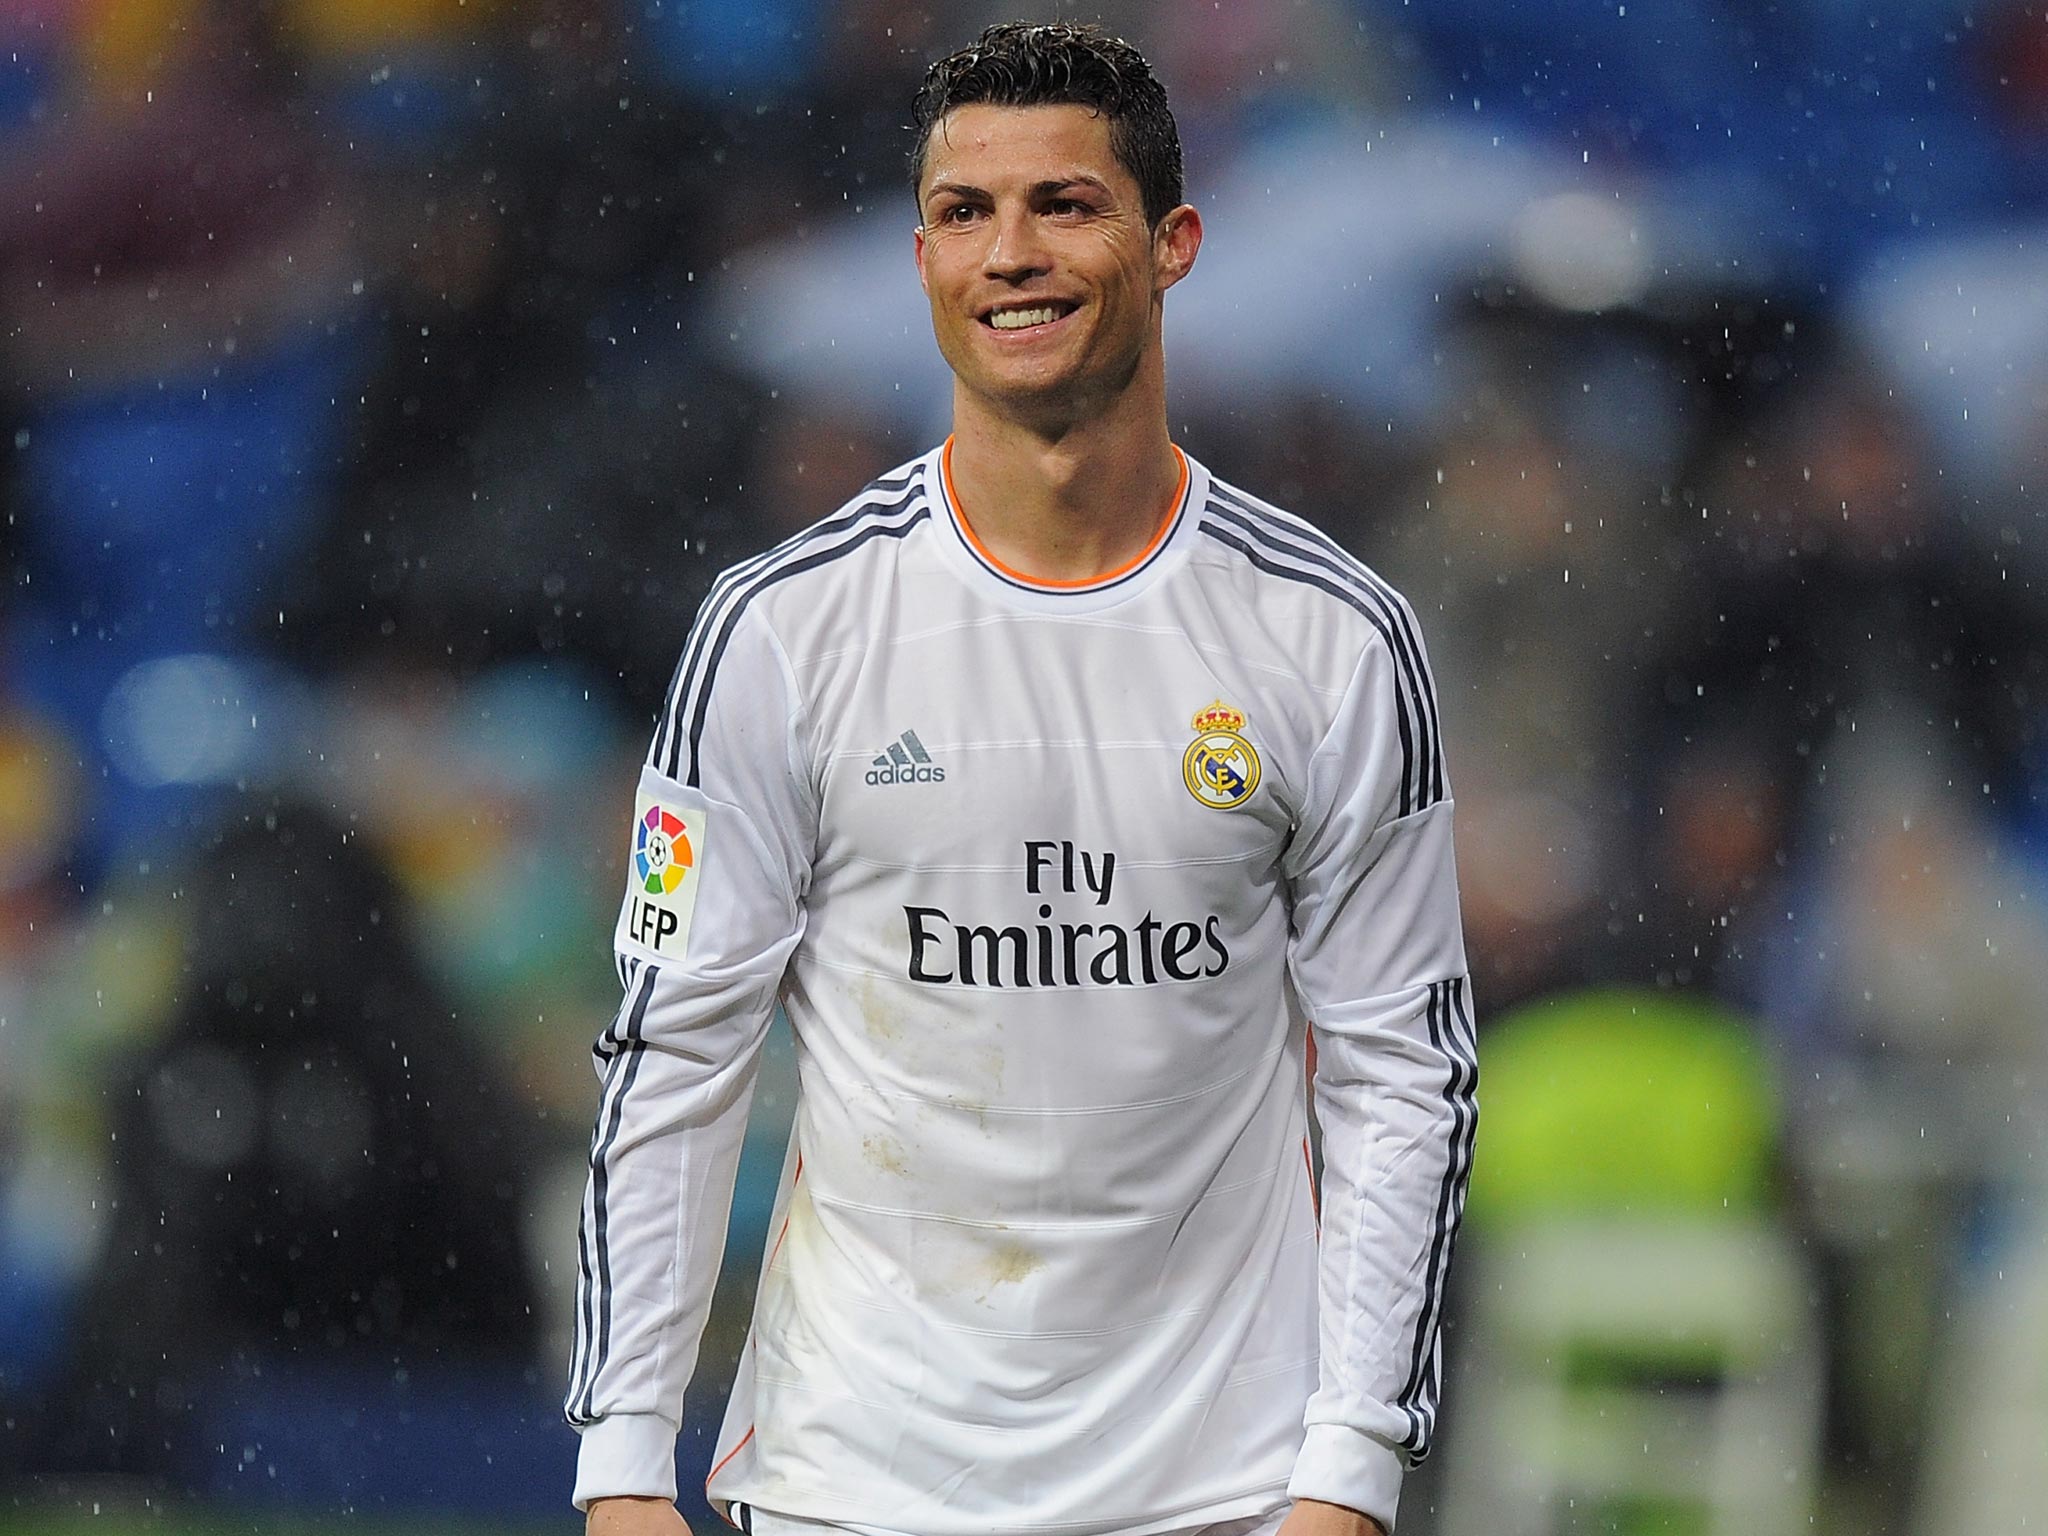 Cristiano Ronaldo during the 5-0 win over Rayo Vallecano